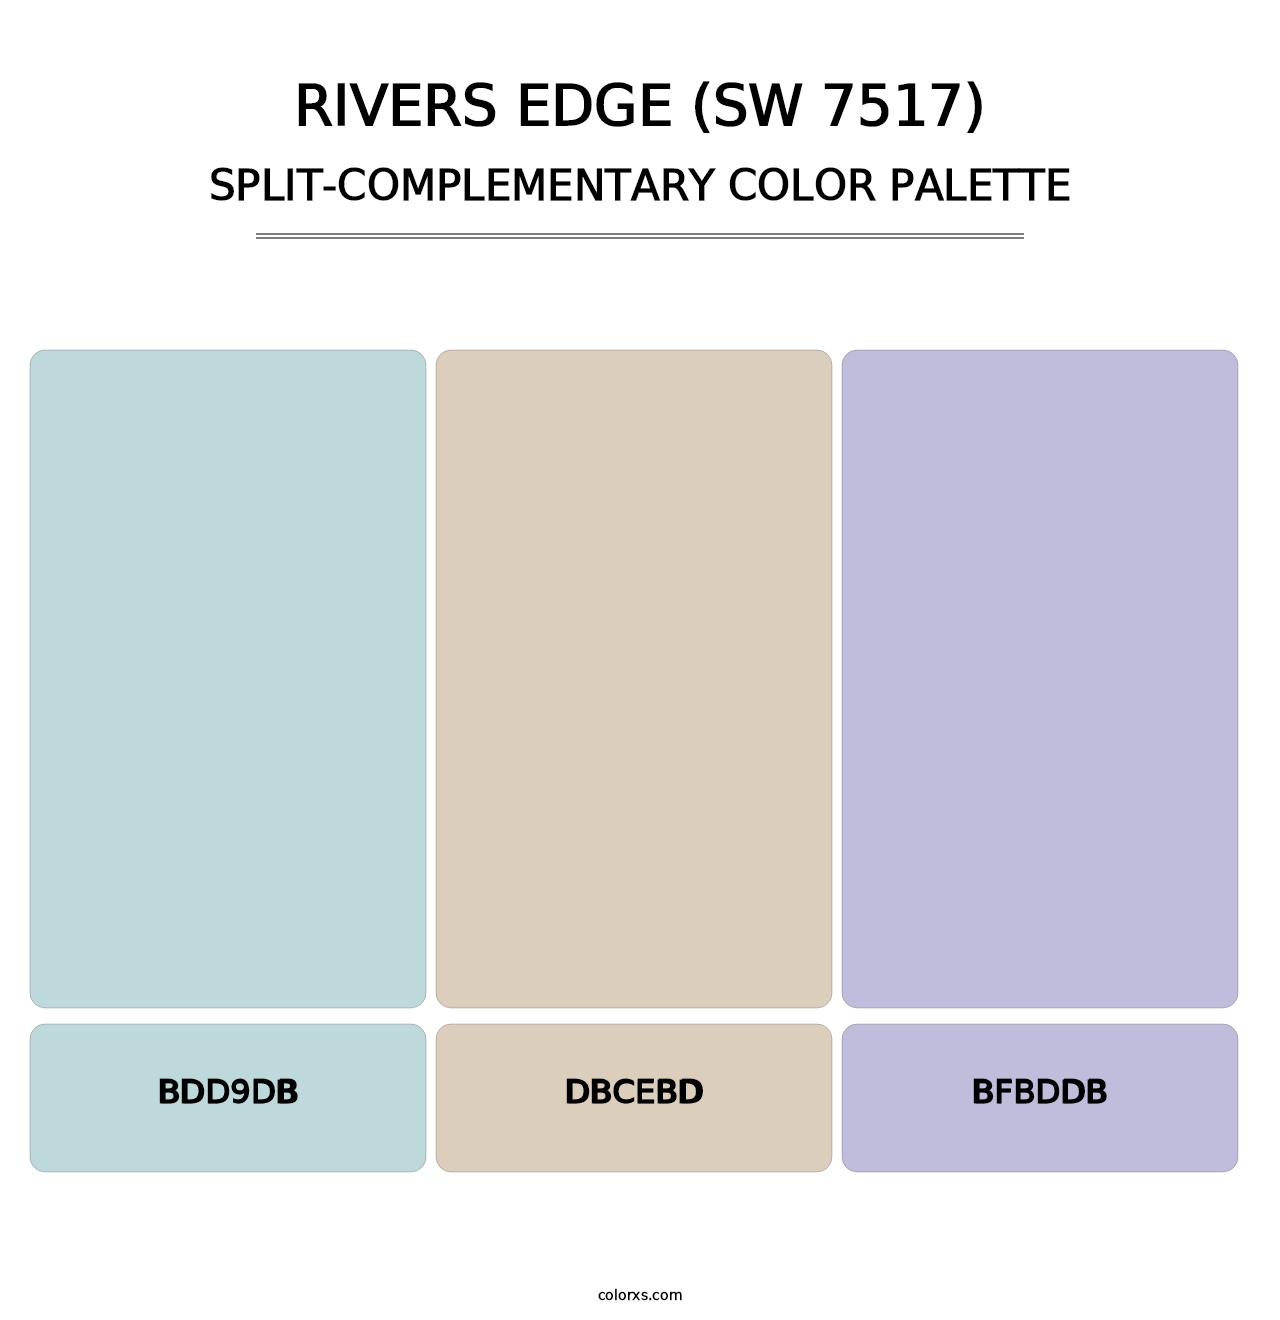 Rivers Edge (SW 7517) - Split-Complementary Color Palette